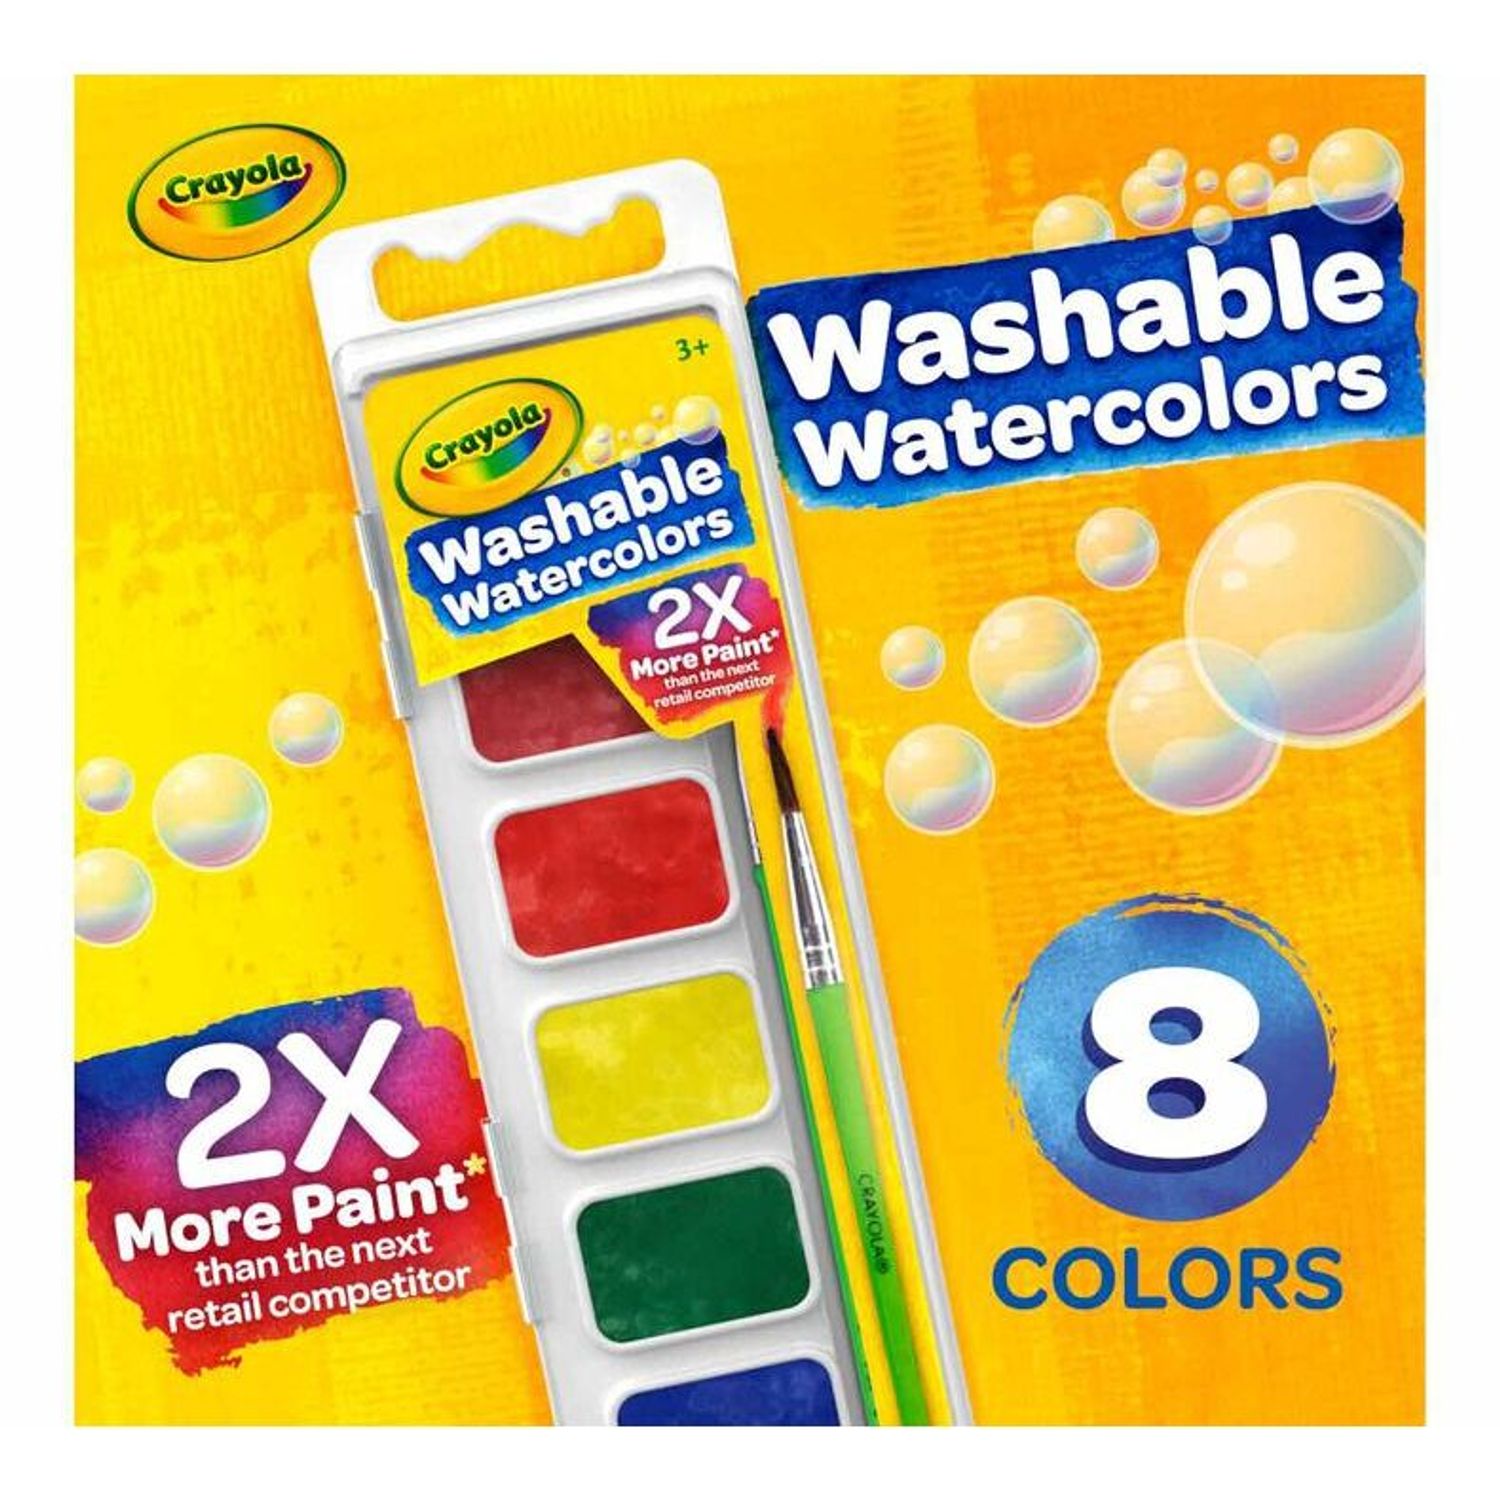 Crayola Washable Watercolors - 24 colors